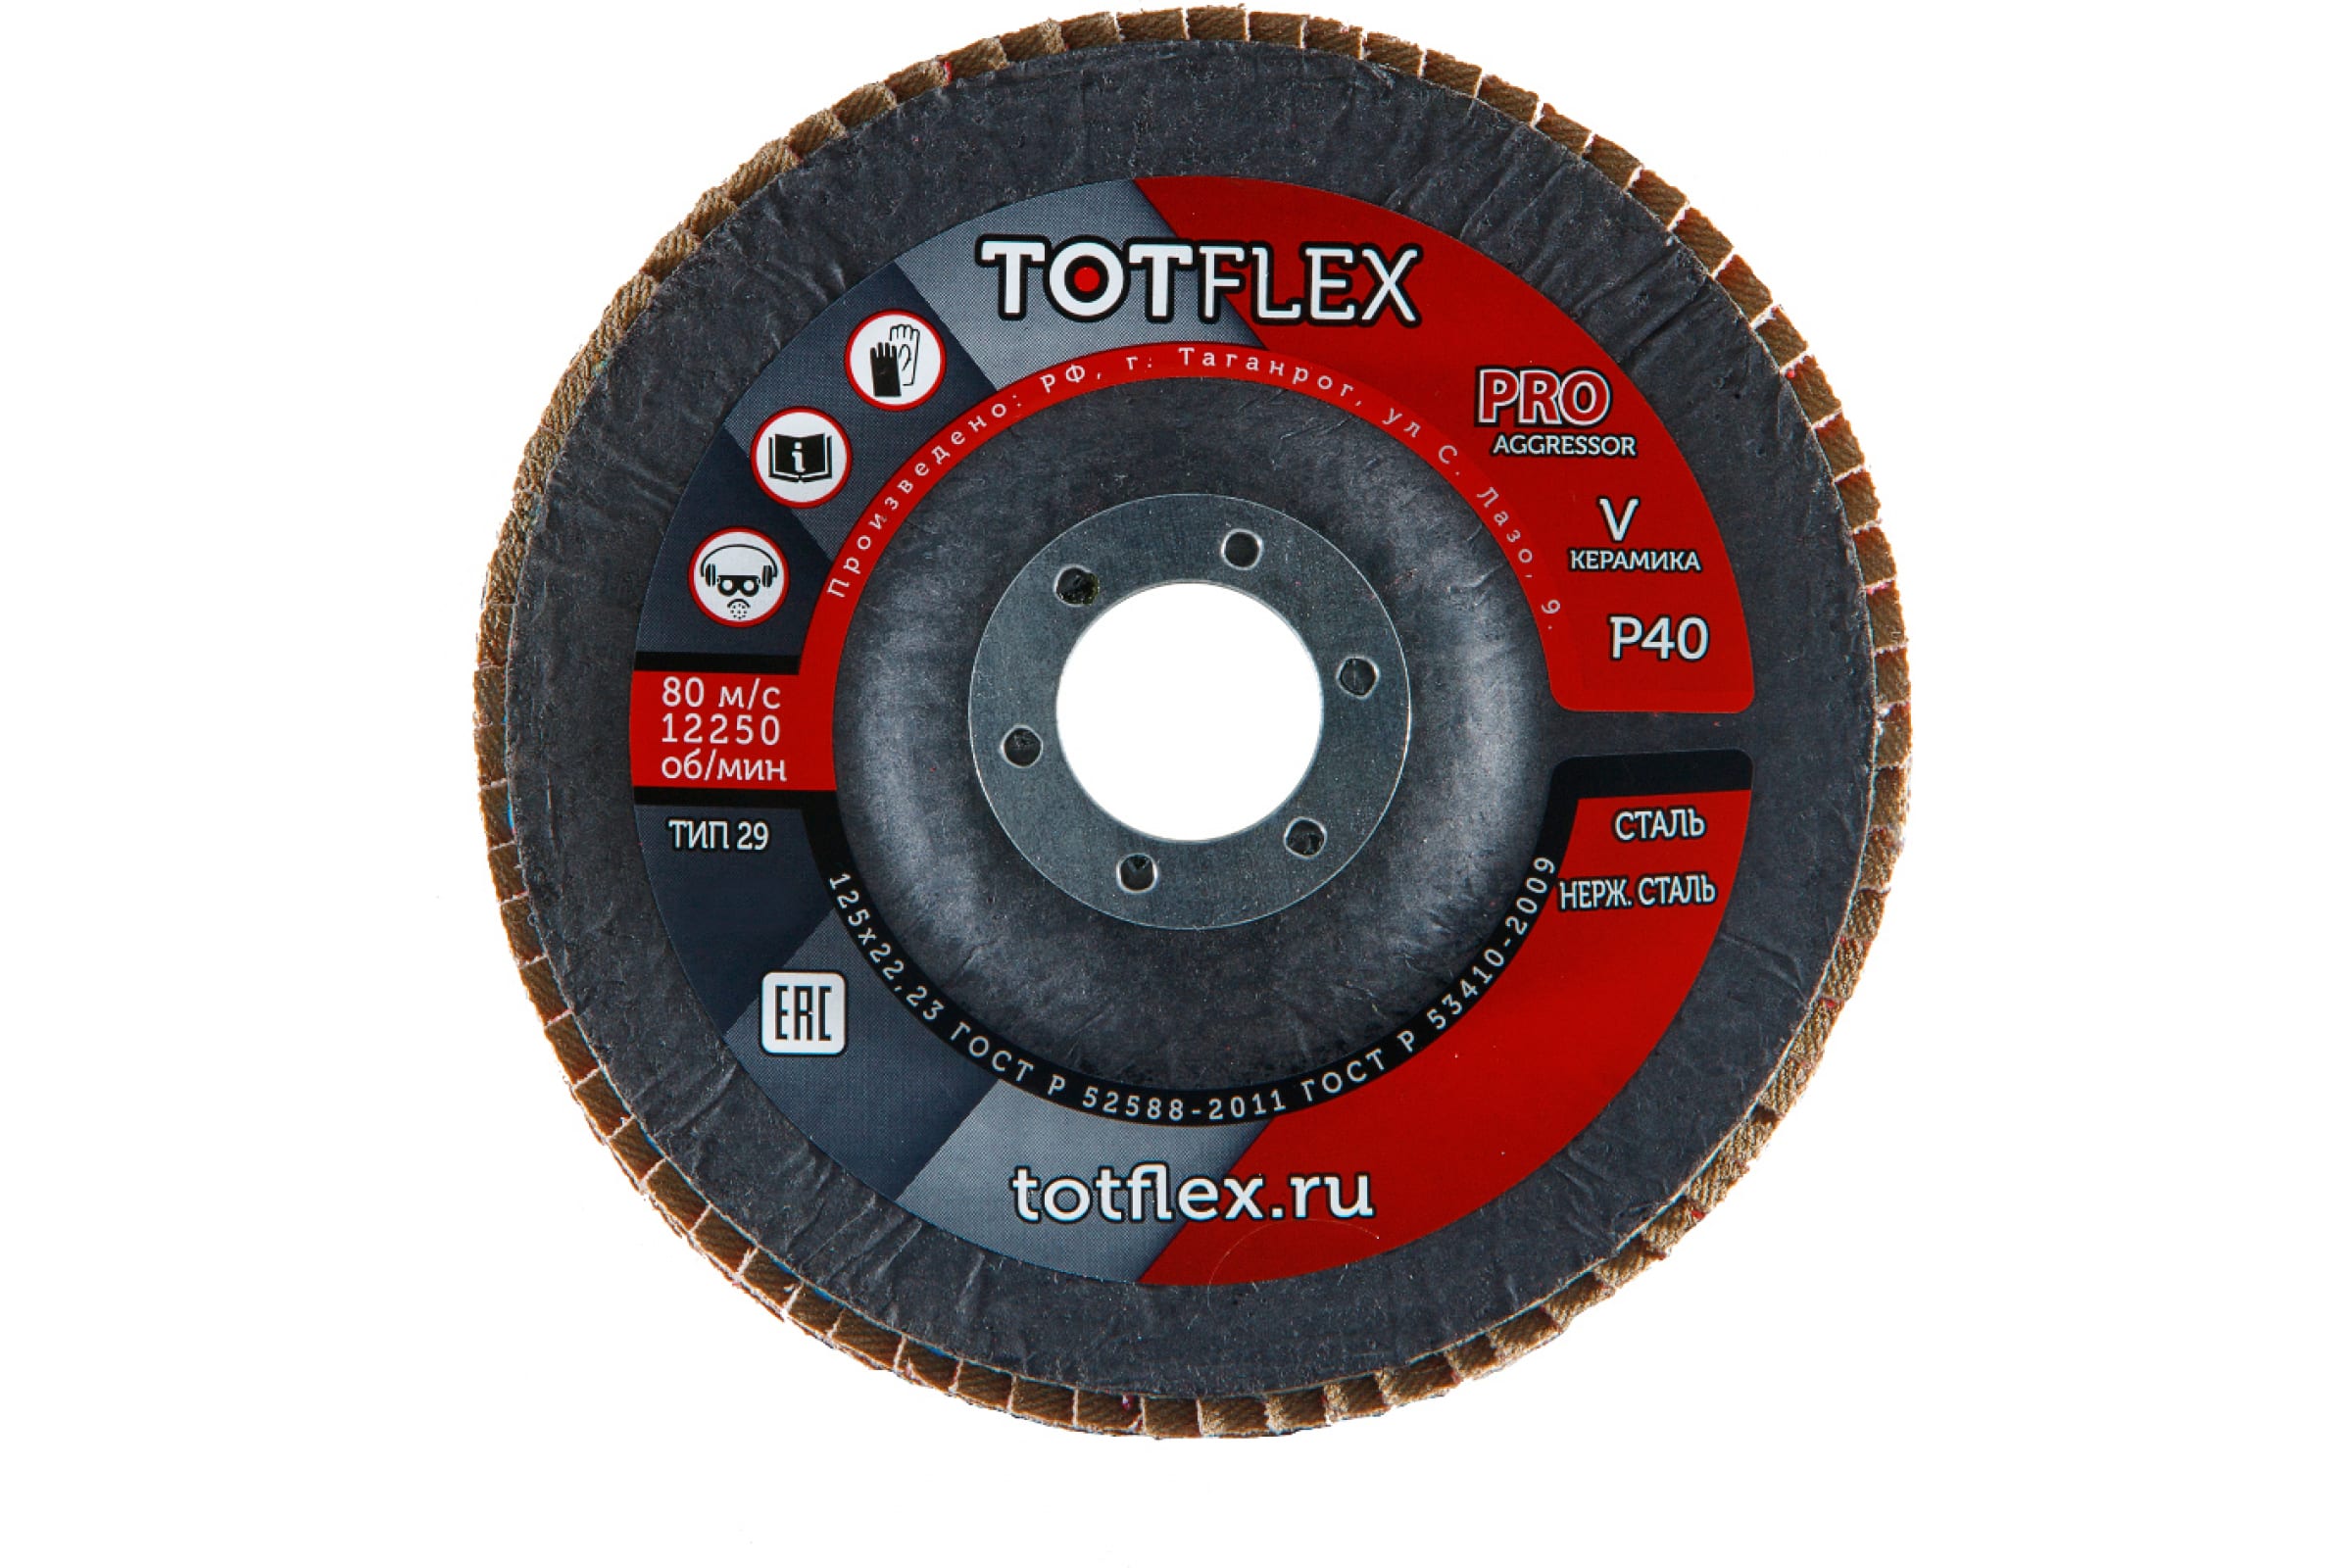 Totflex Круг лепестковый торцевой AGGRESSOR-PRO 2 125x22 V P40 4631148128248 круг лепестковый торцевой курс 39914 125 мм p 80